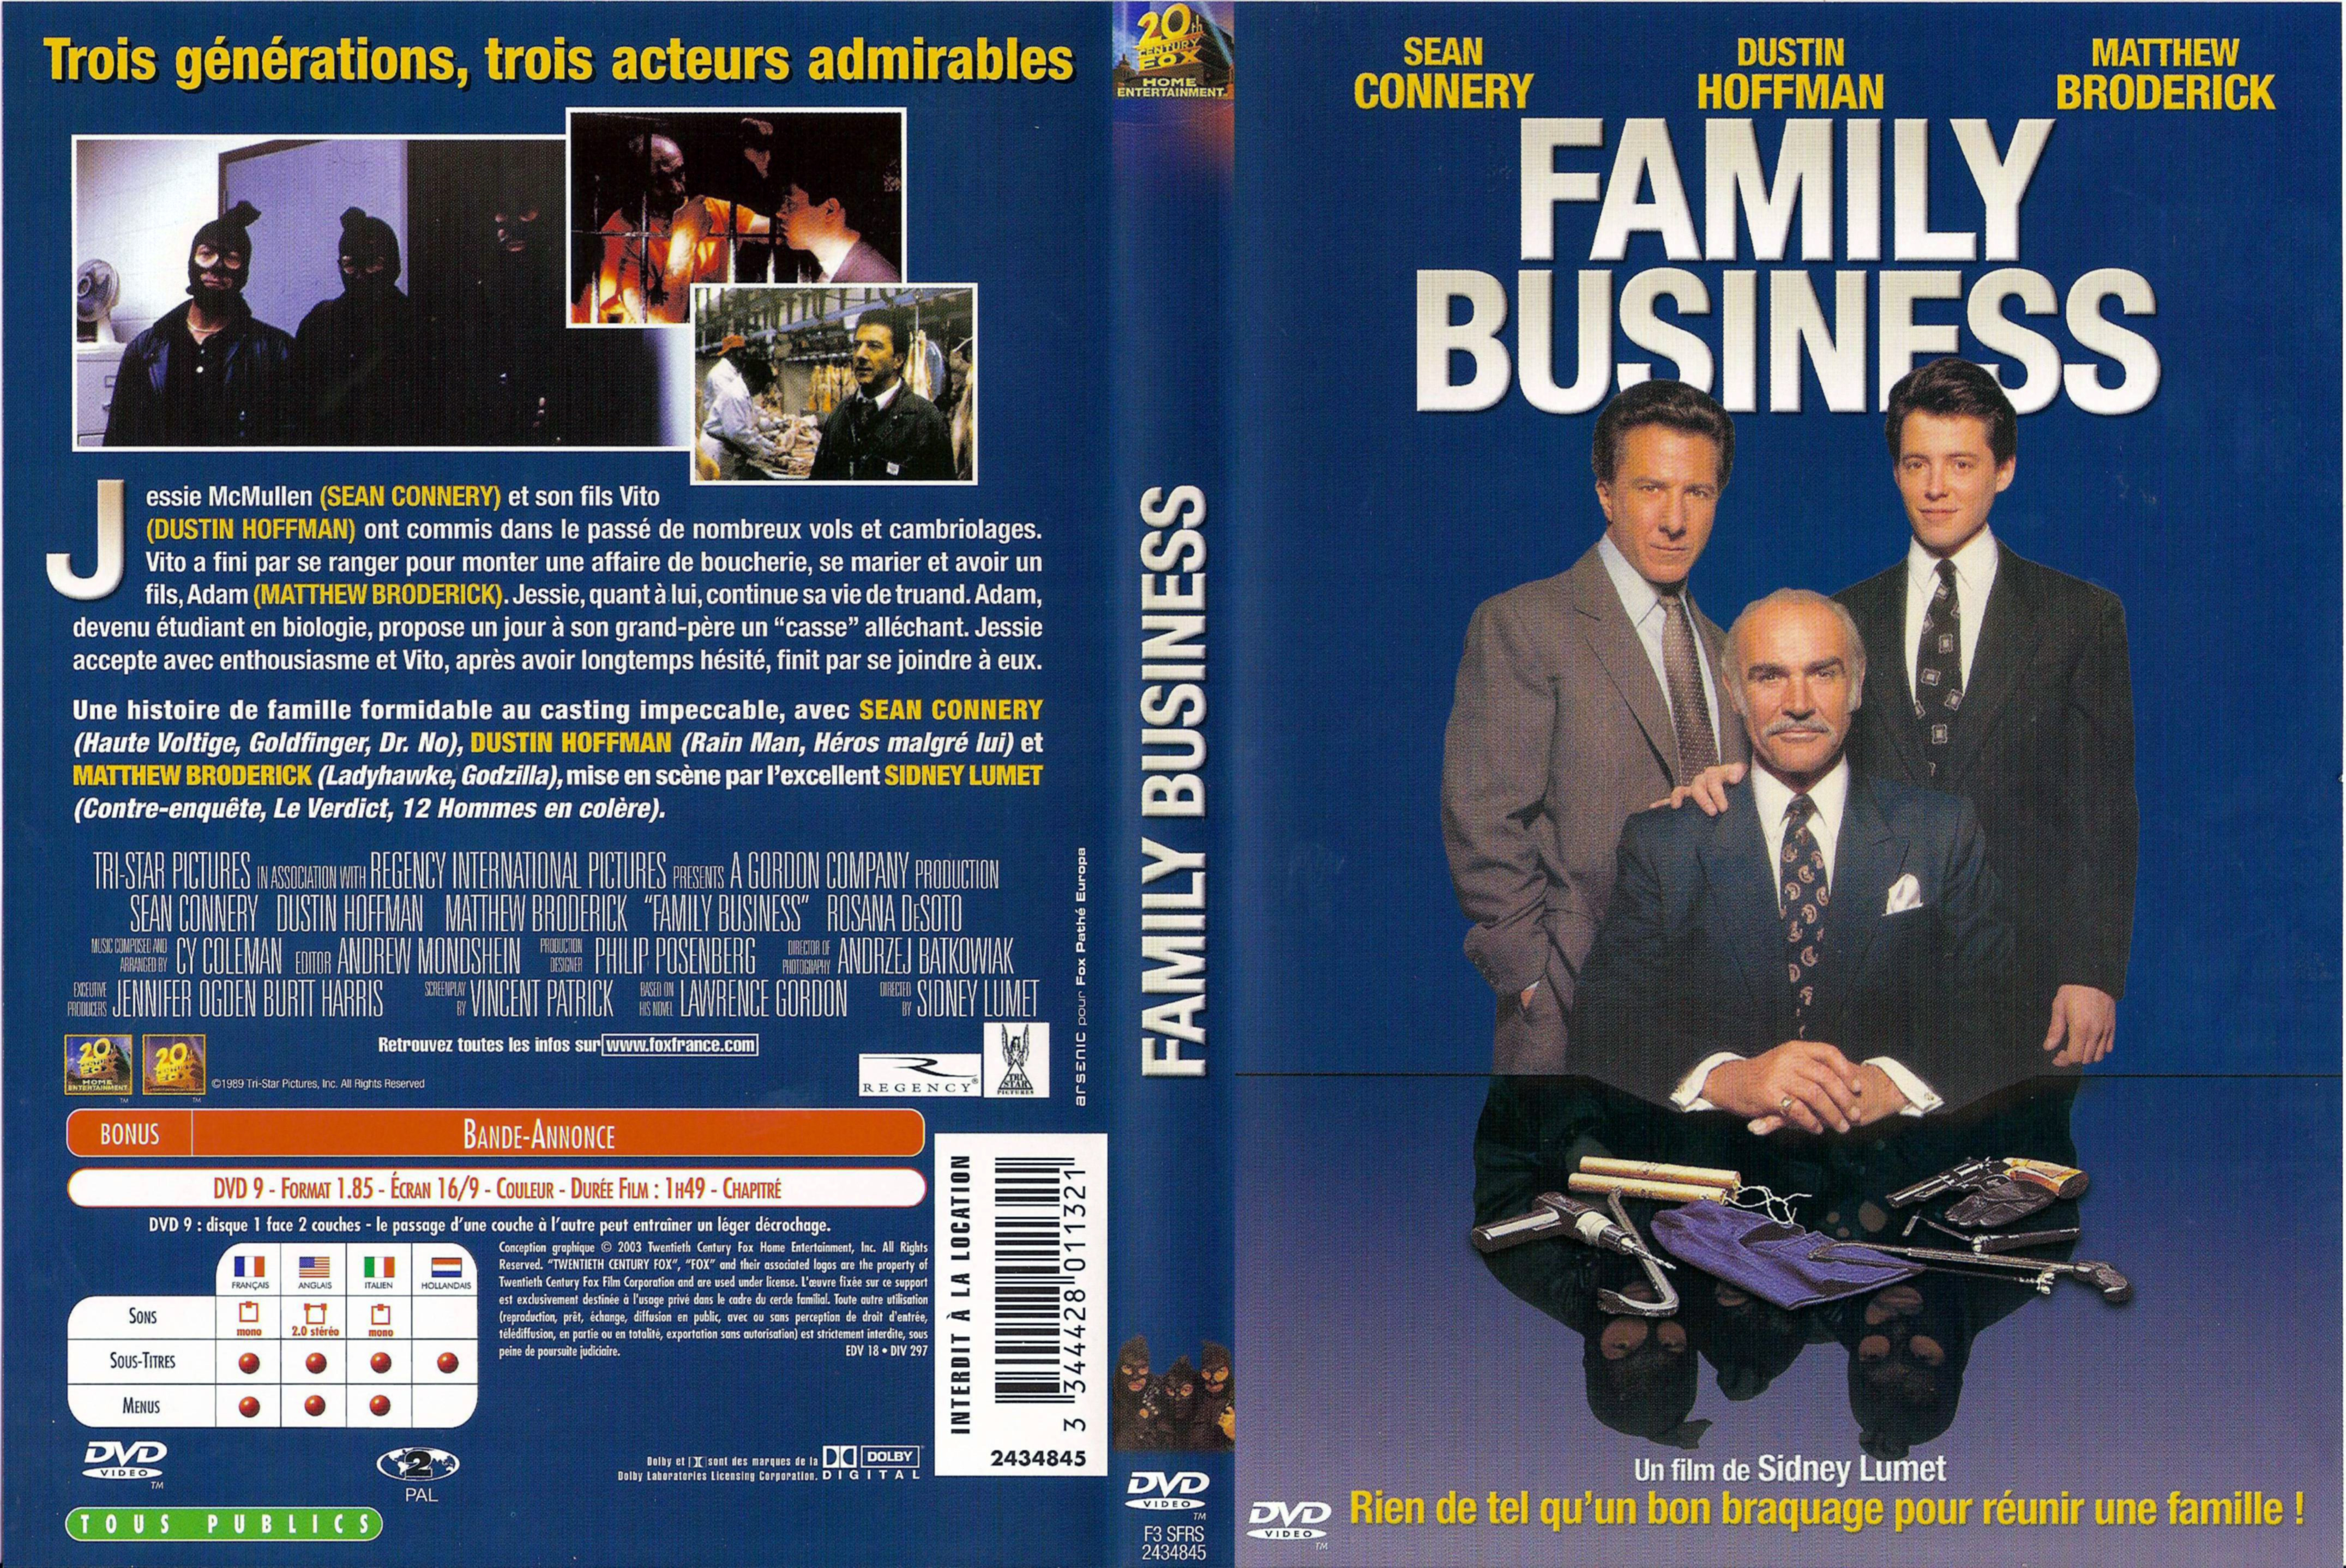 Jaquette DVD Family business v2